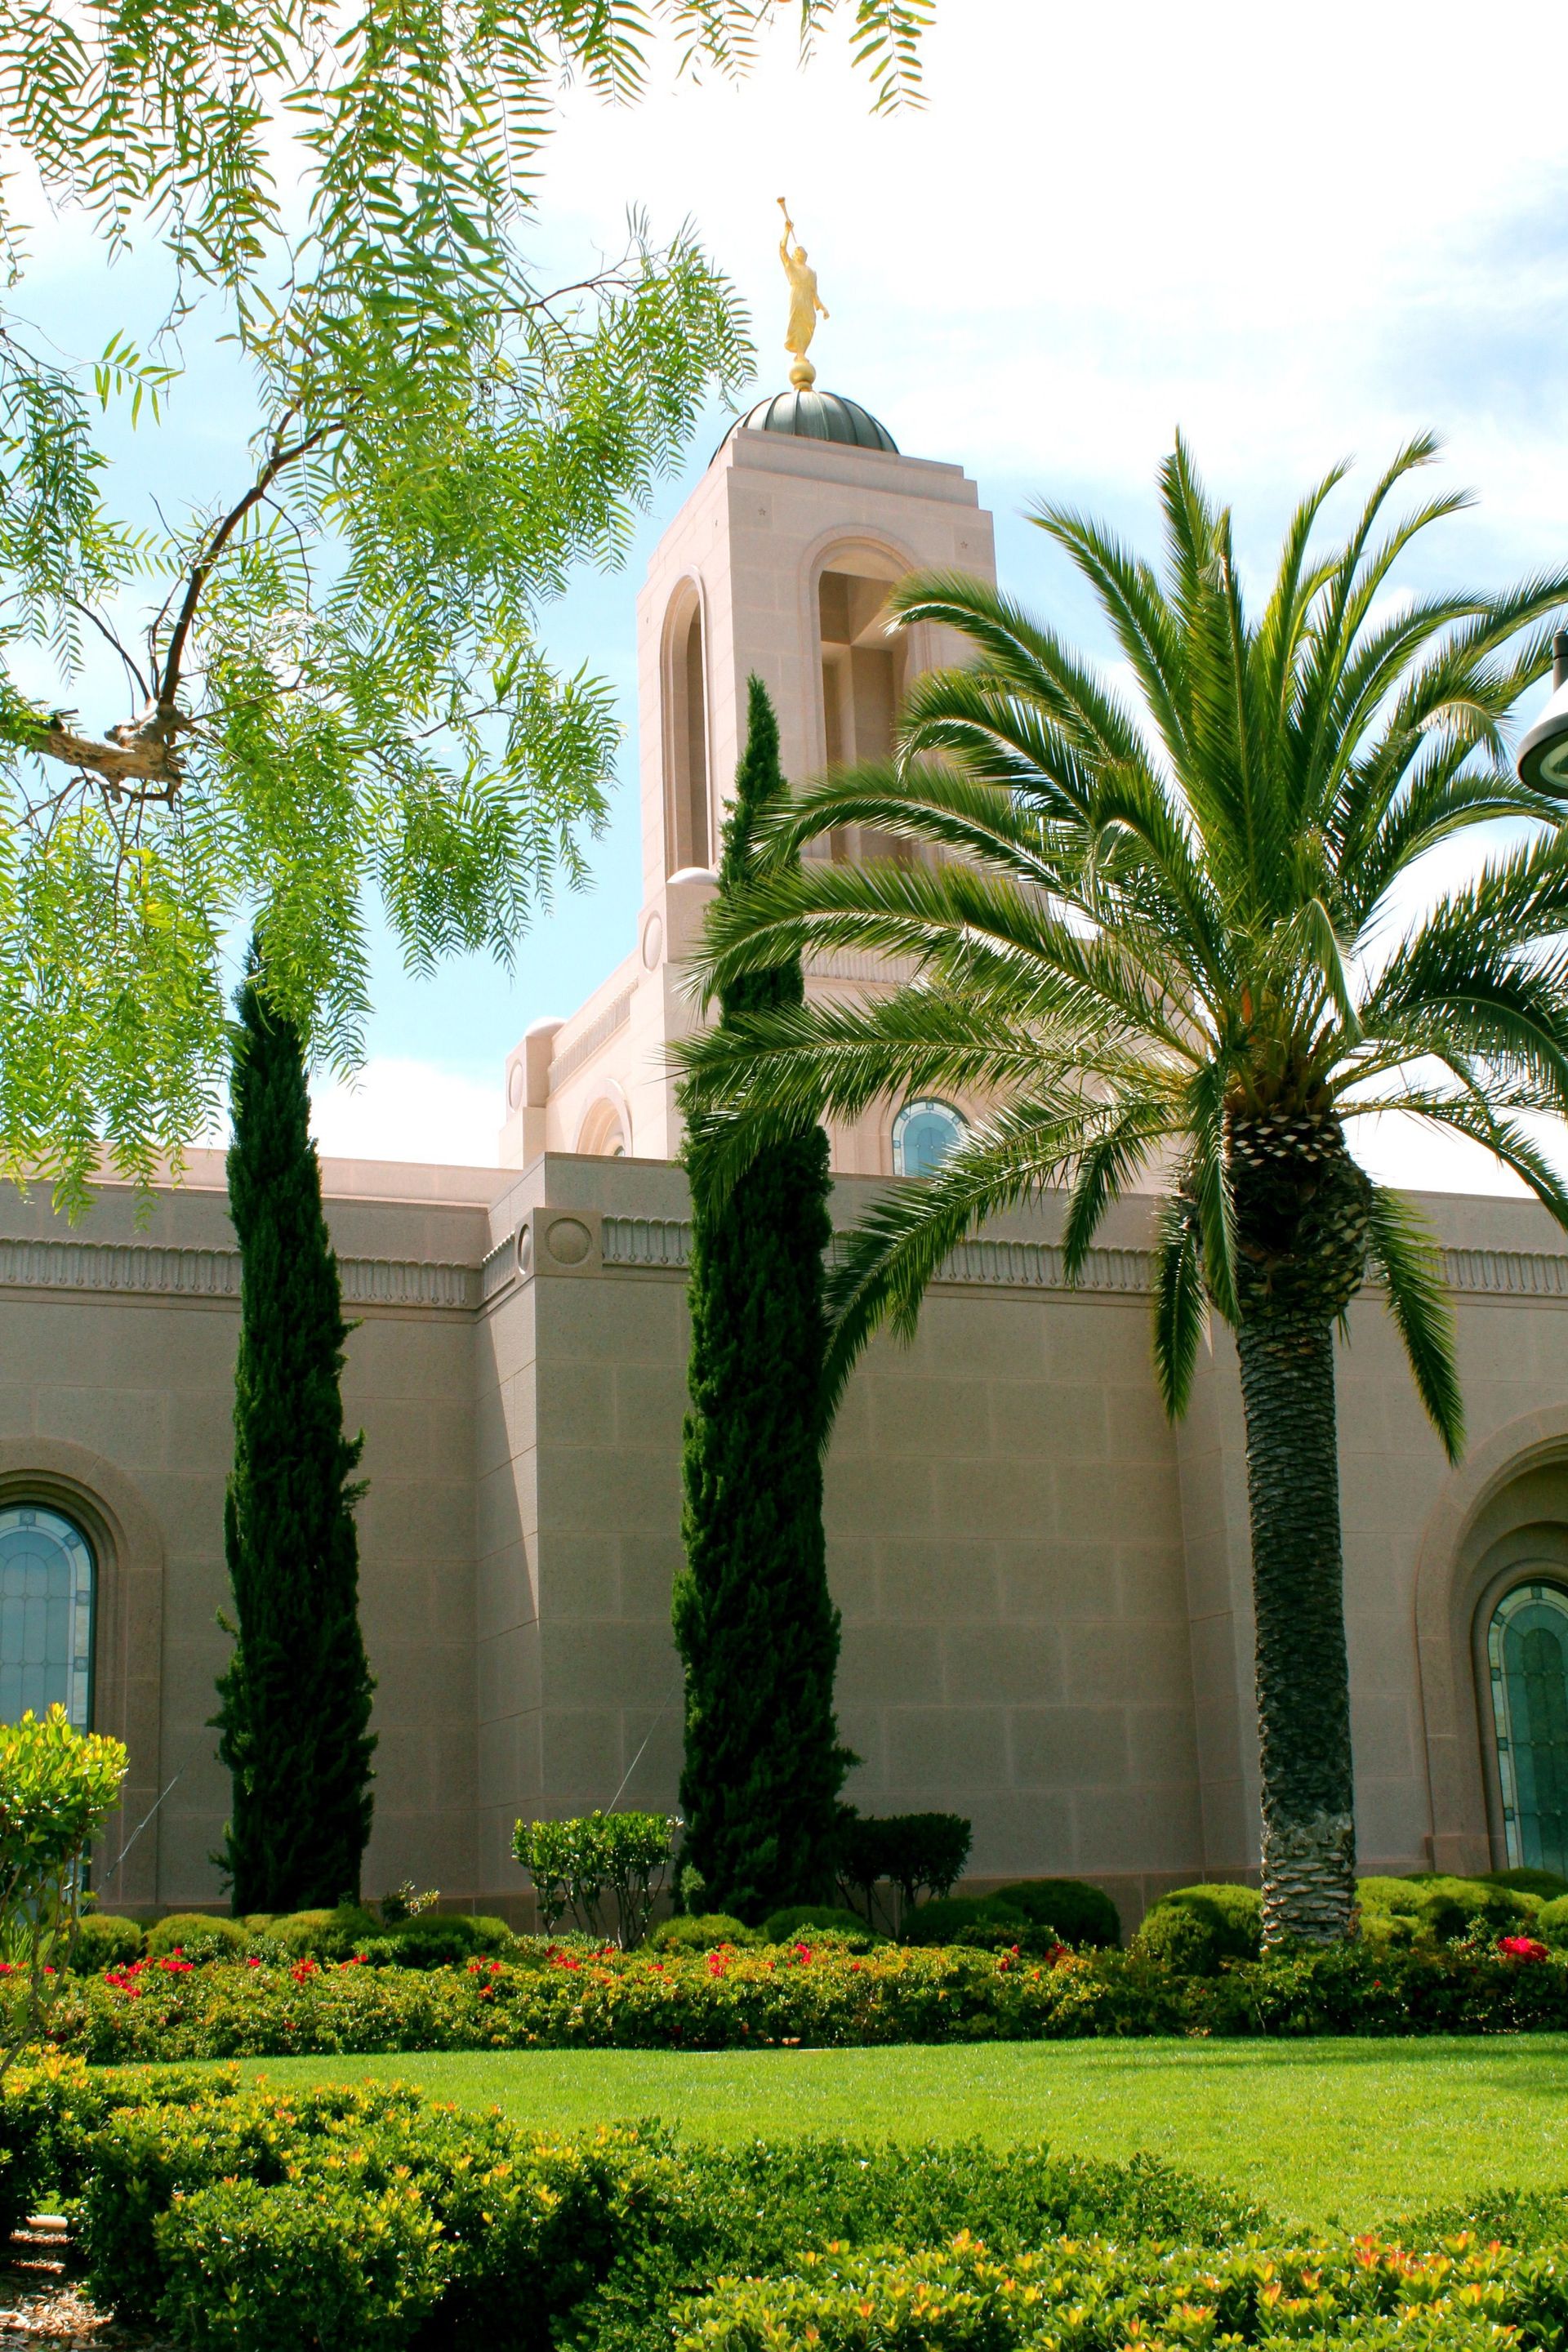 The Newport Beach California Temple exterior, including scenery.